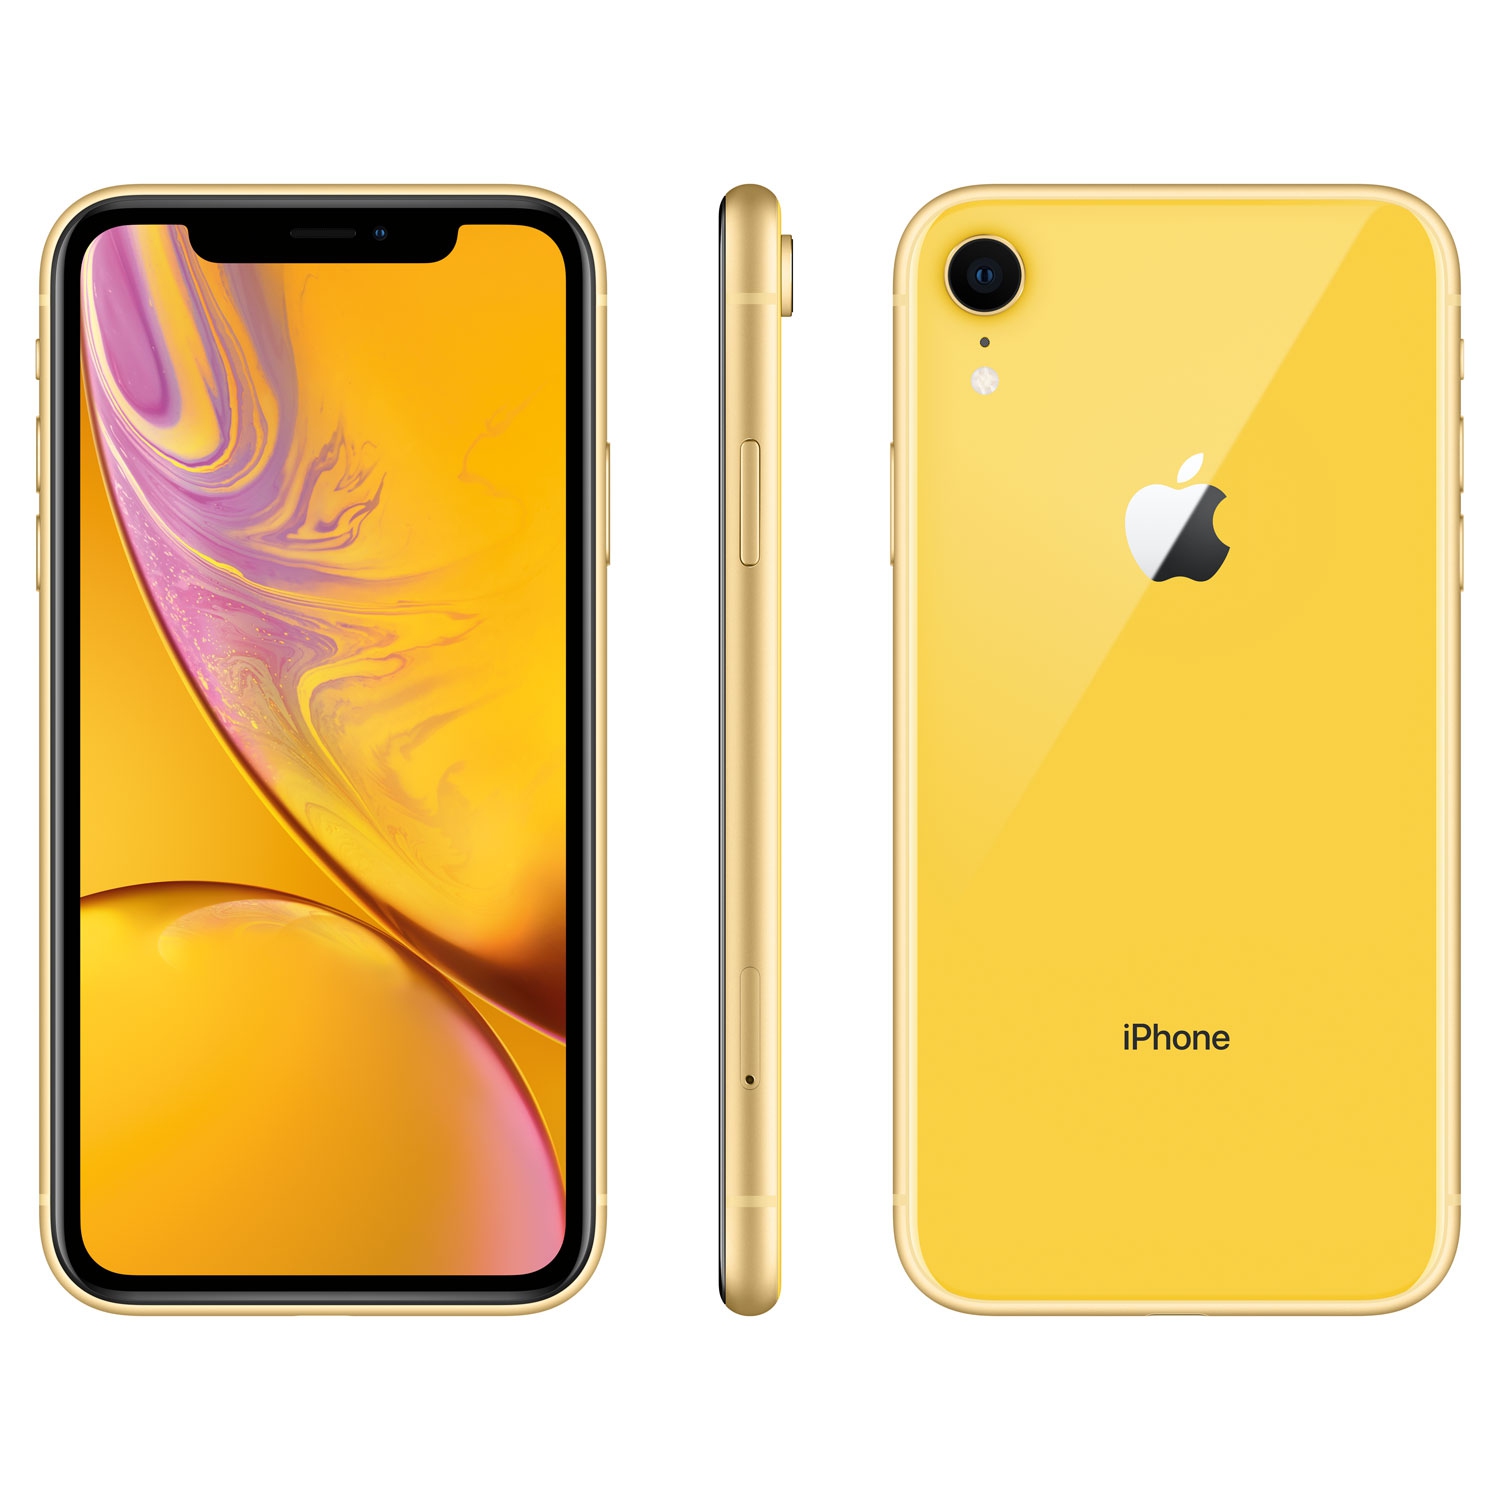 Apple iPhone XR 128GB Smartphone - Yellow - Unlocked - Open Box